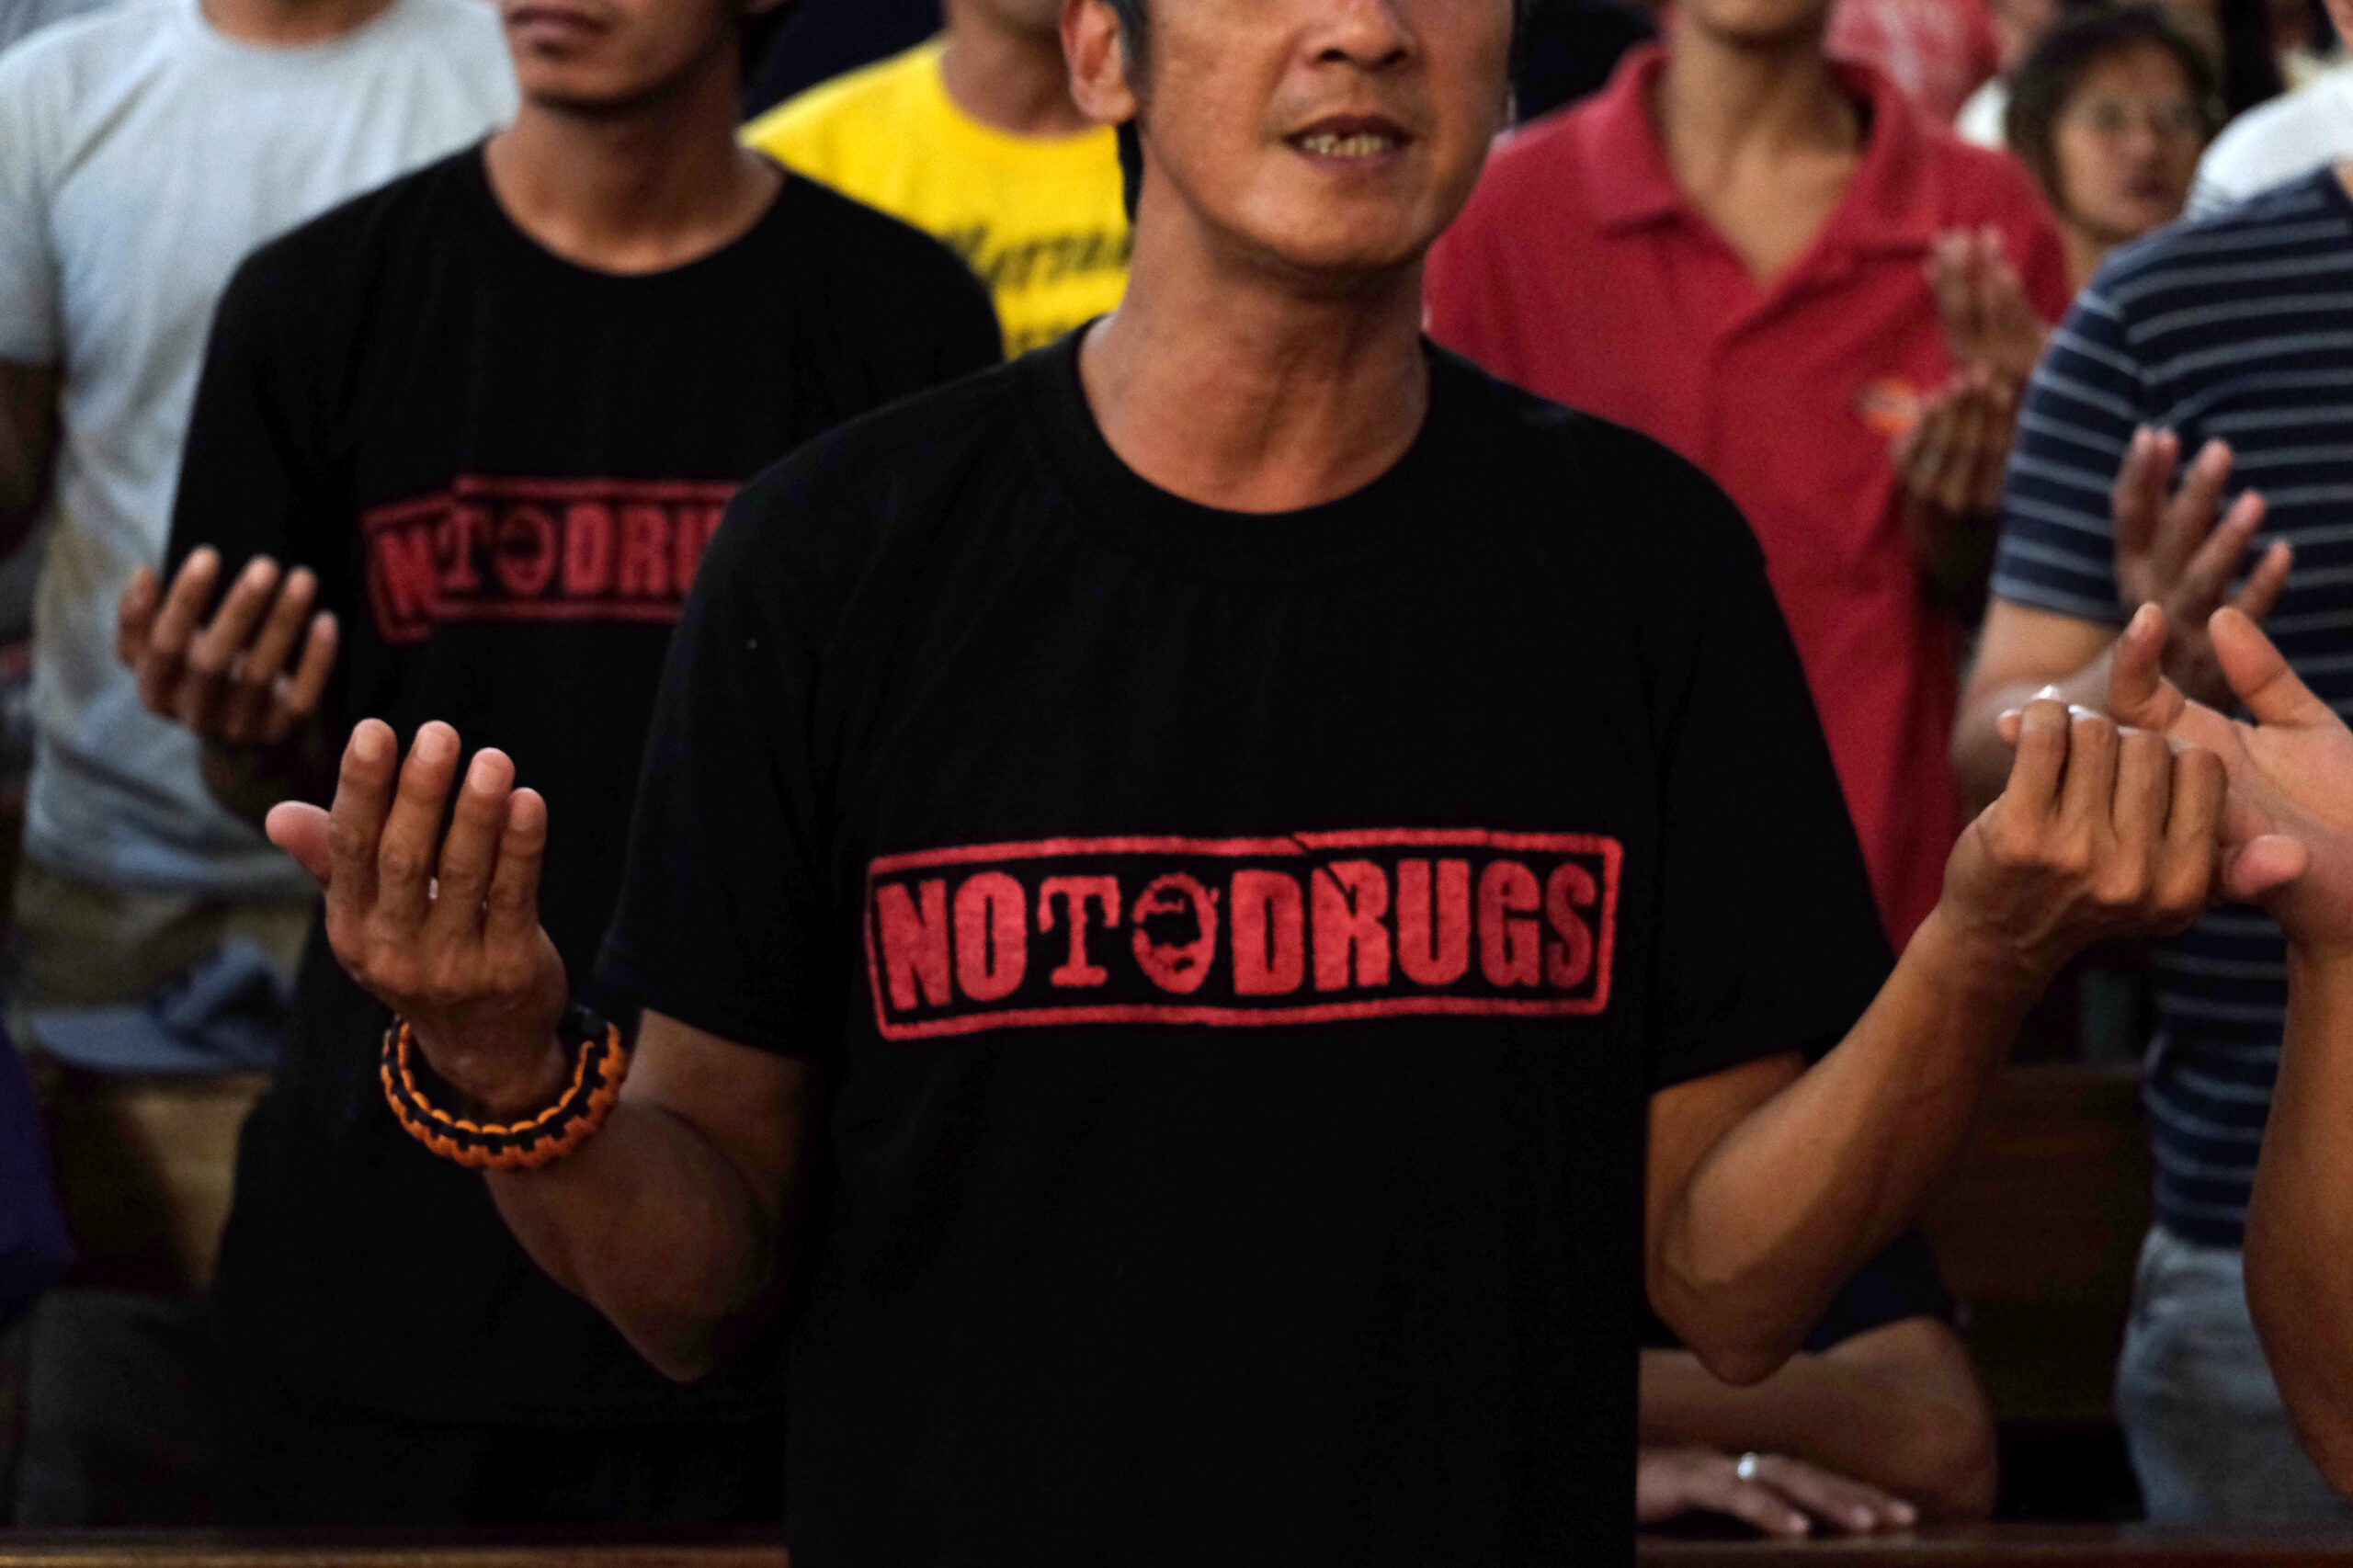 ‘Small majority’ of Filipinos want Church help in drug rehab